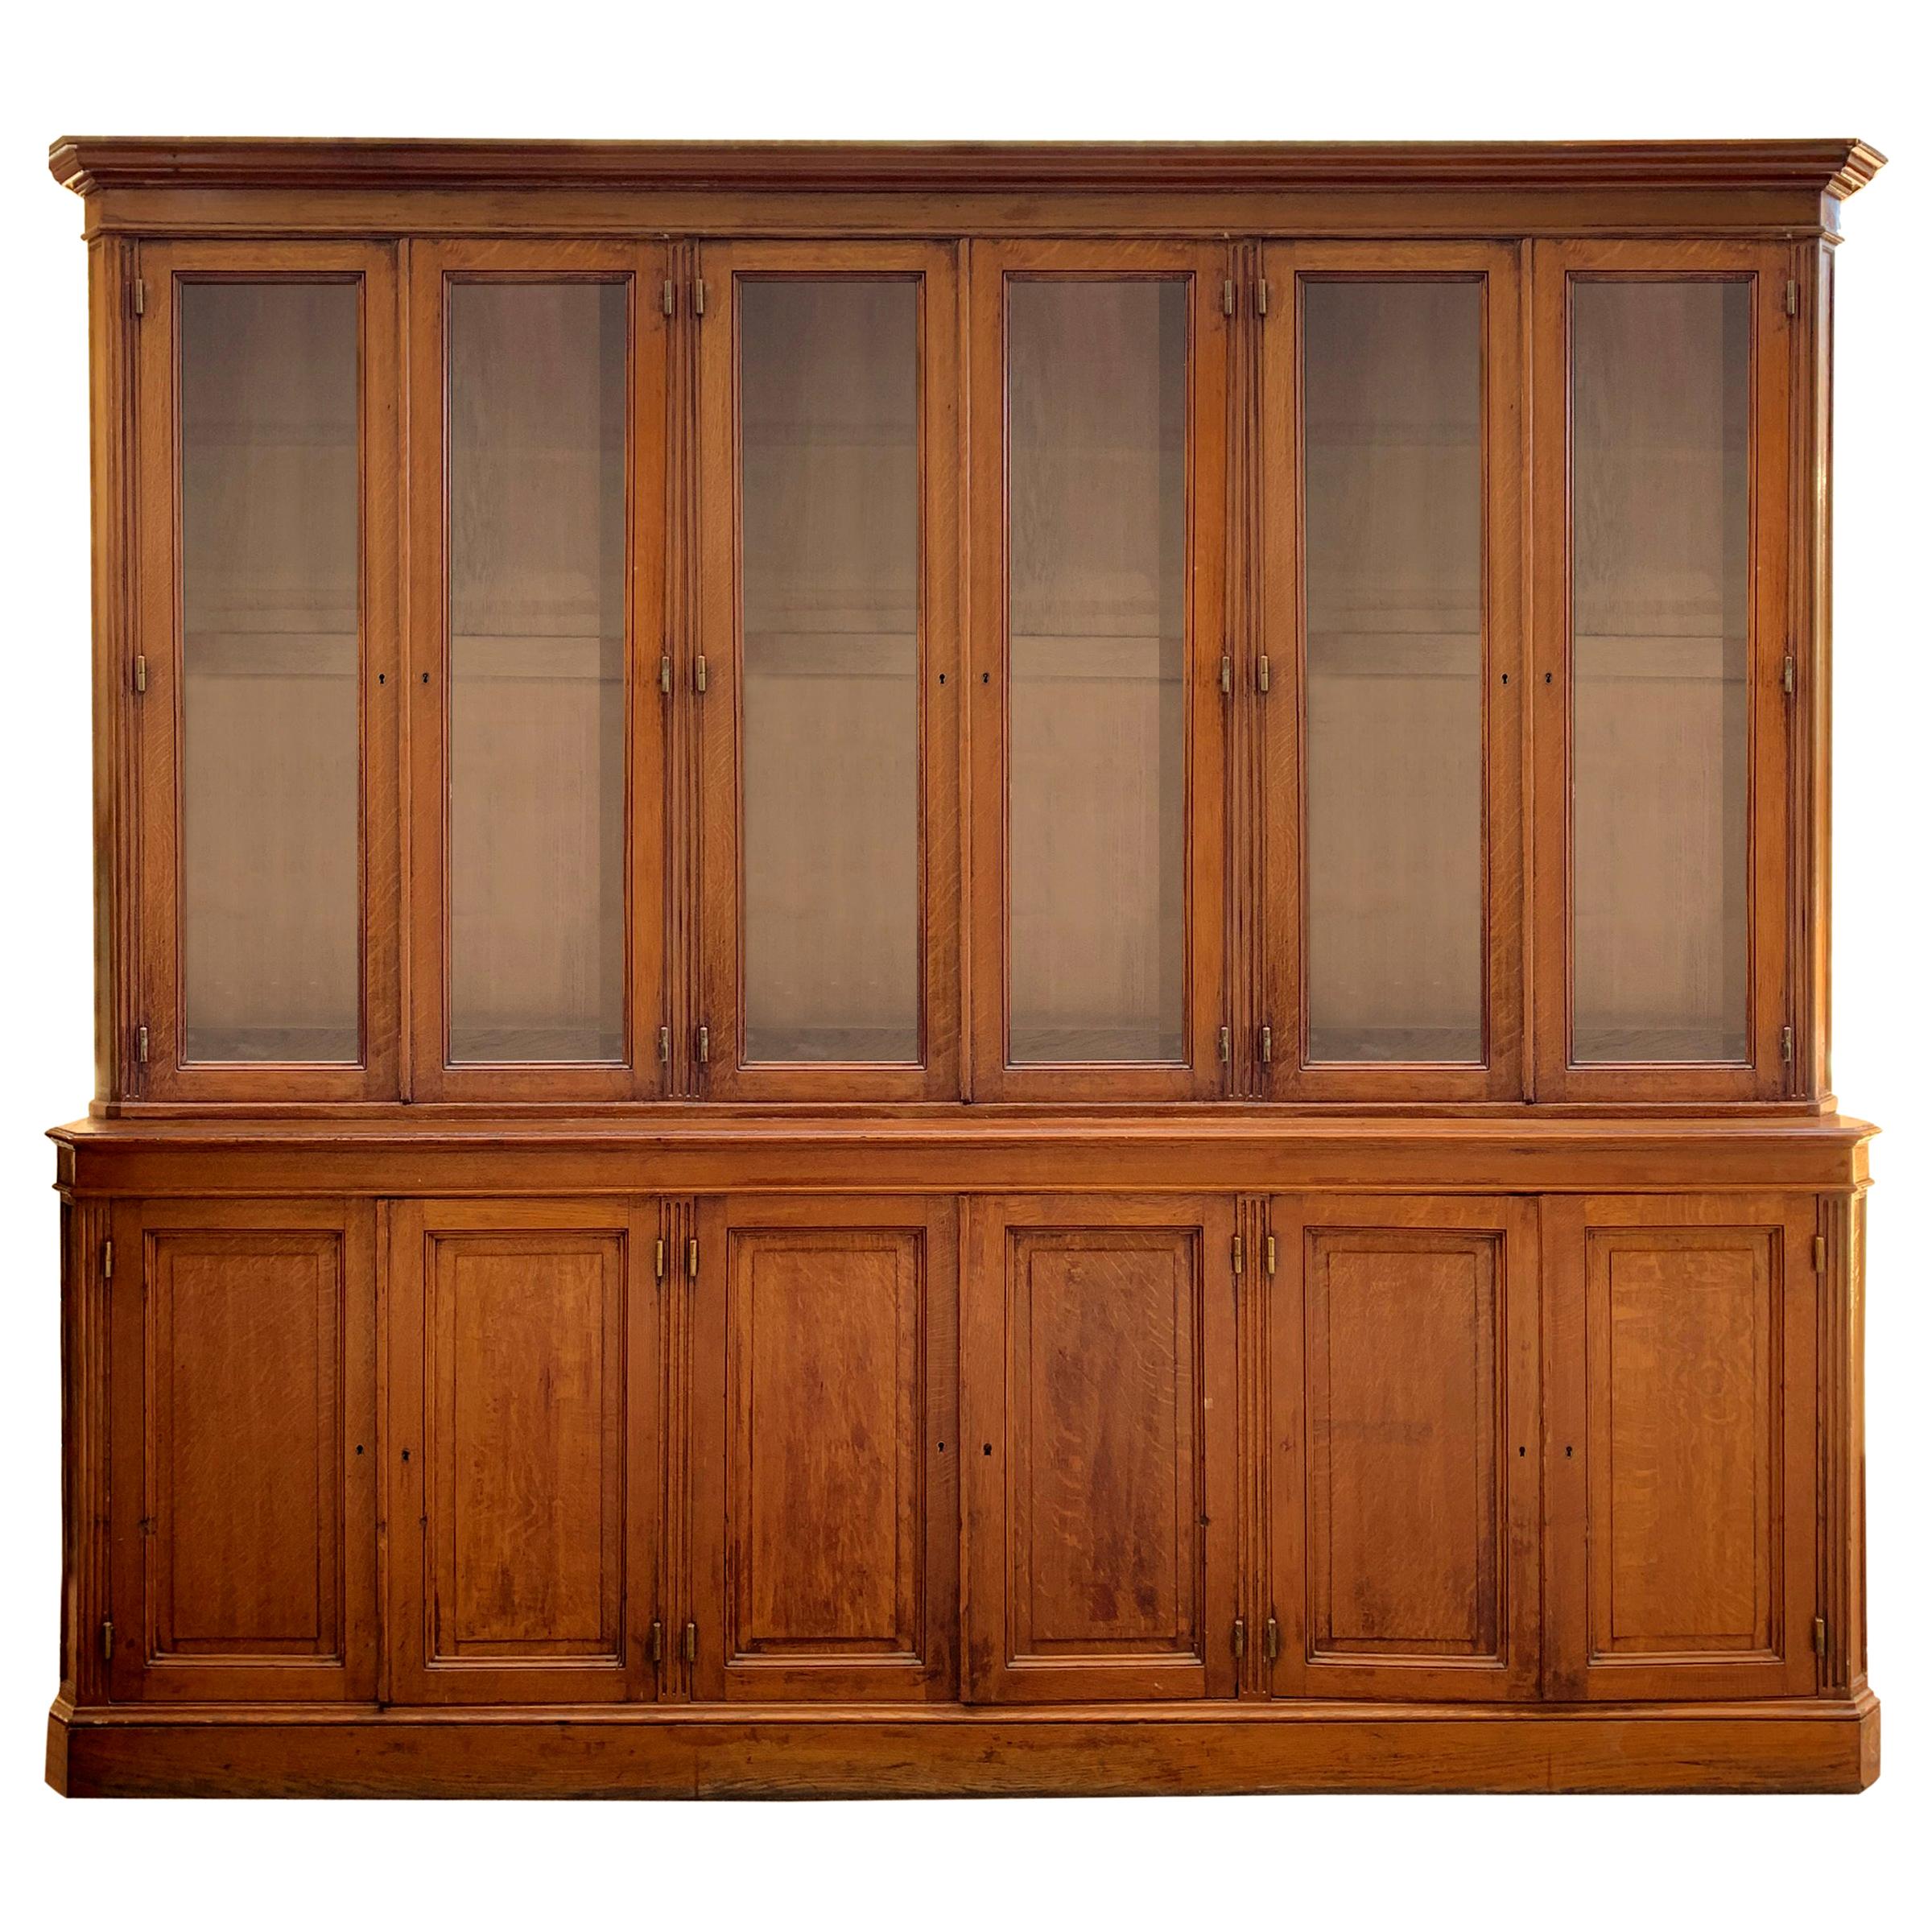 Late 19th Century French Twelve-Door Cabinet